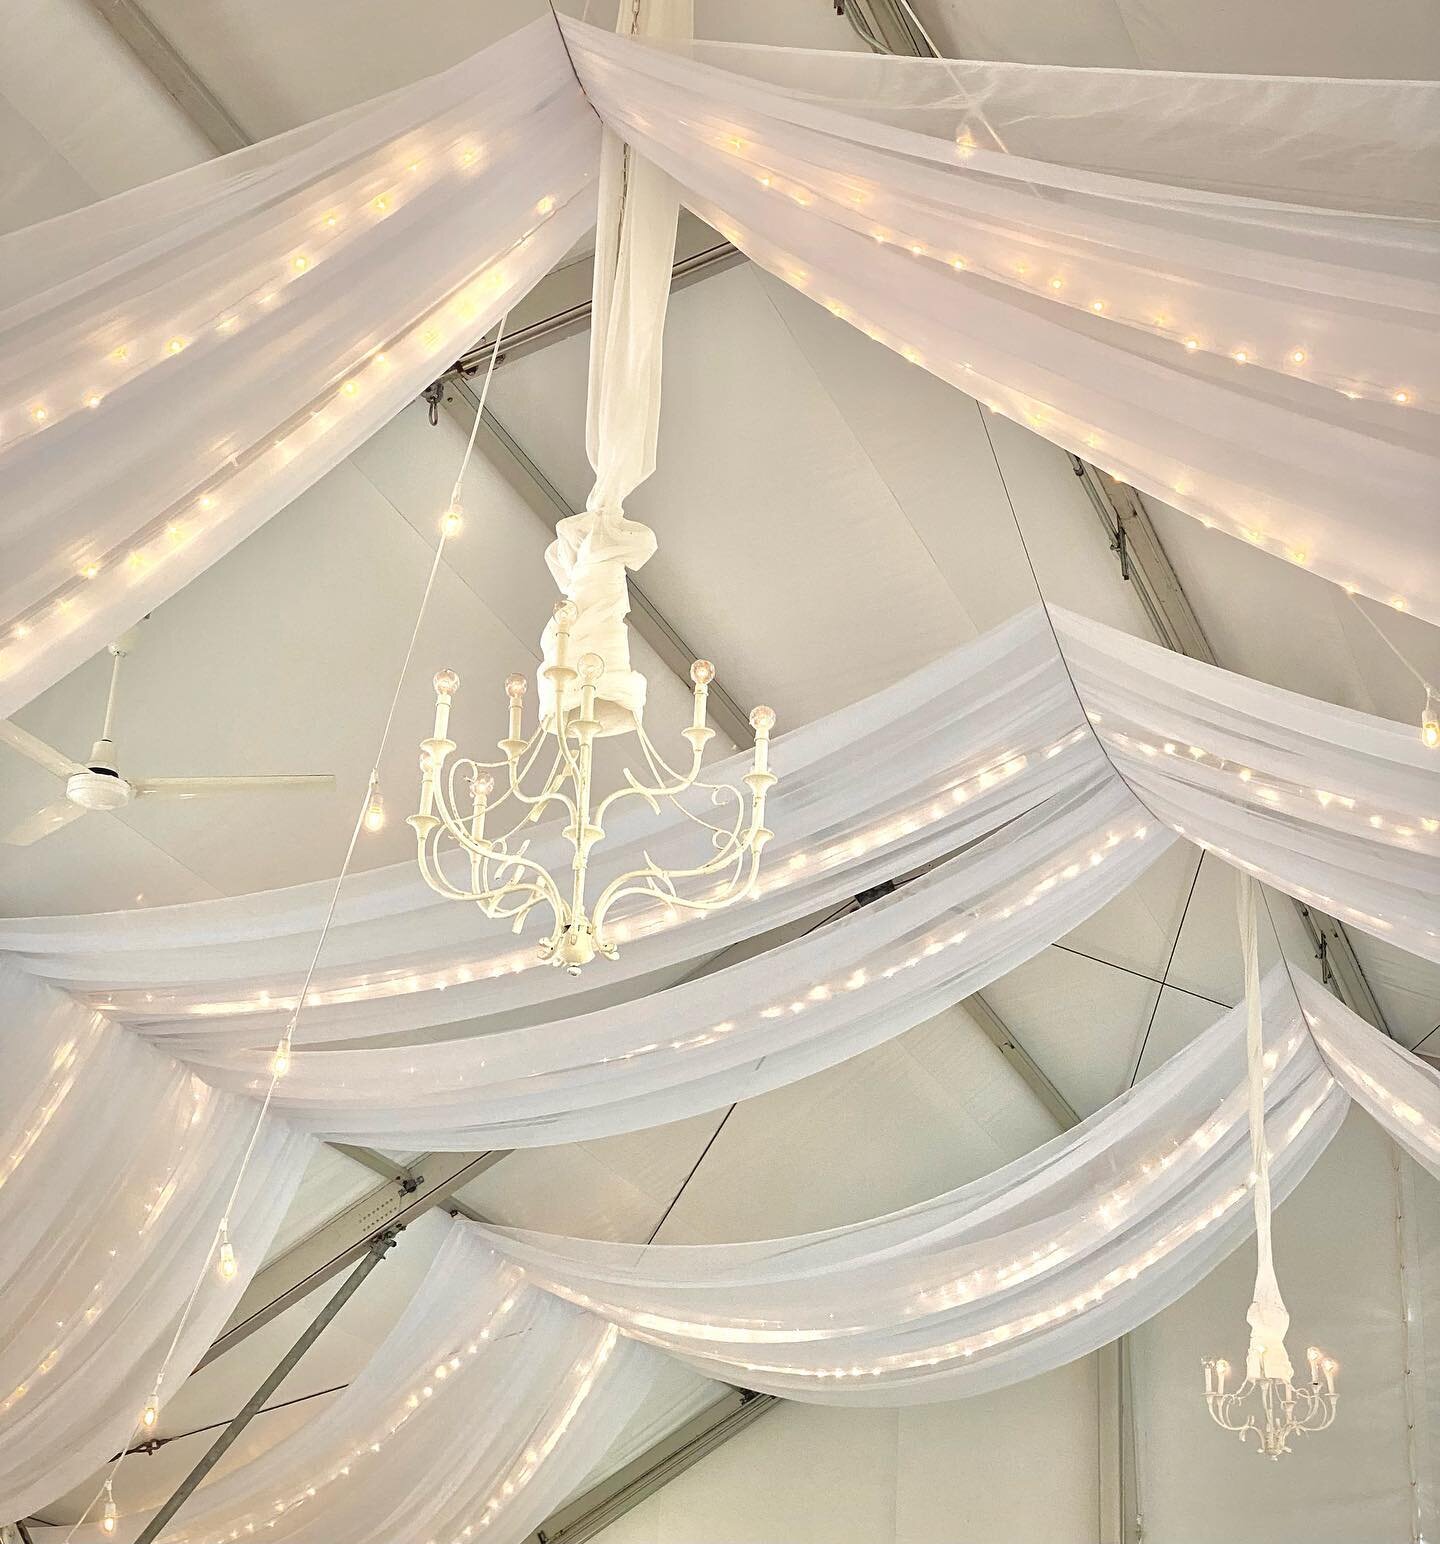 Tenting ceiling treatment swags!  @gorge.ousweddings @windmountainranch 

#lights #weddinglights #swags #swag #white #light #summer #vibe #goodtimes #bowerbirdpdx #bowerbirdevents #drapelife #drape #portland #oregon #usa #washington #pnw #pnwonderlan